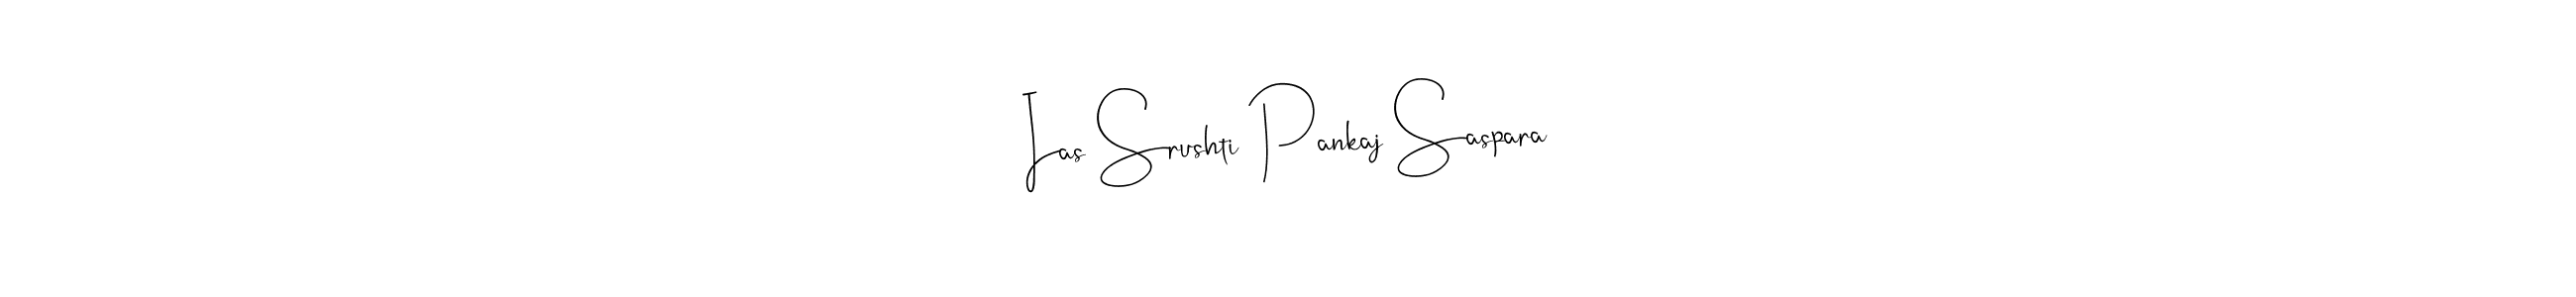 How to Draw Ias Srushti Pankaj Saspara signature style? Andilay-7BmLP is a latest design signature styles for name Ias Srushti Pankaj Saspara. Ias Srushti Pankaj Saspara signature style 4 images and pictures png